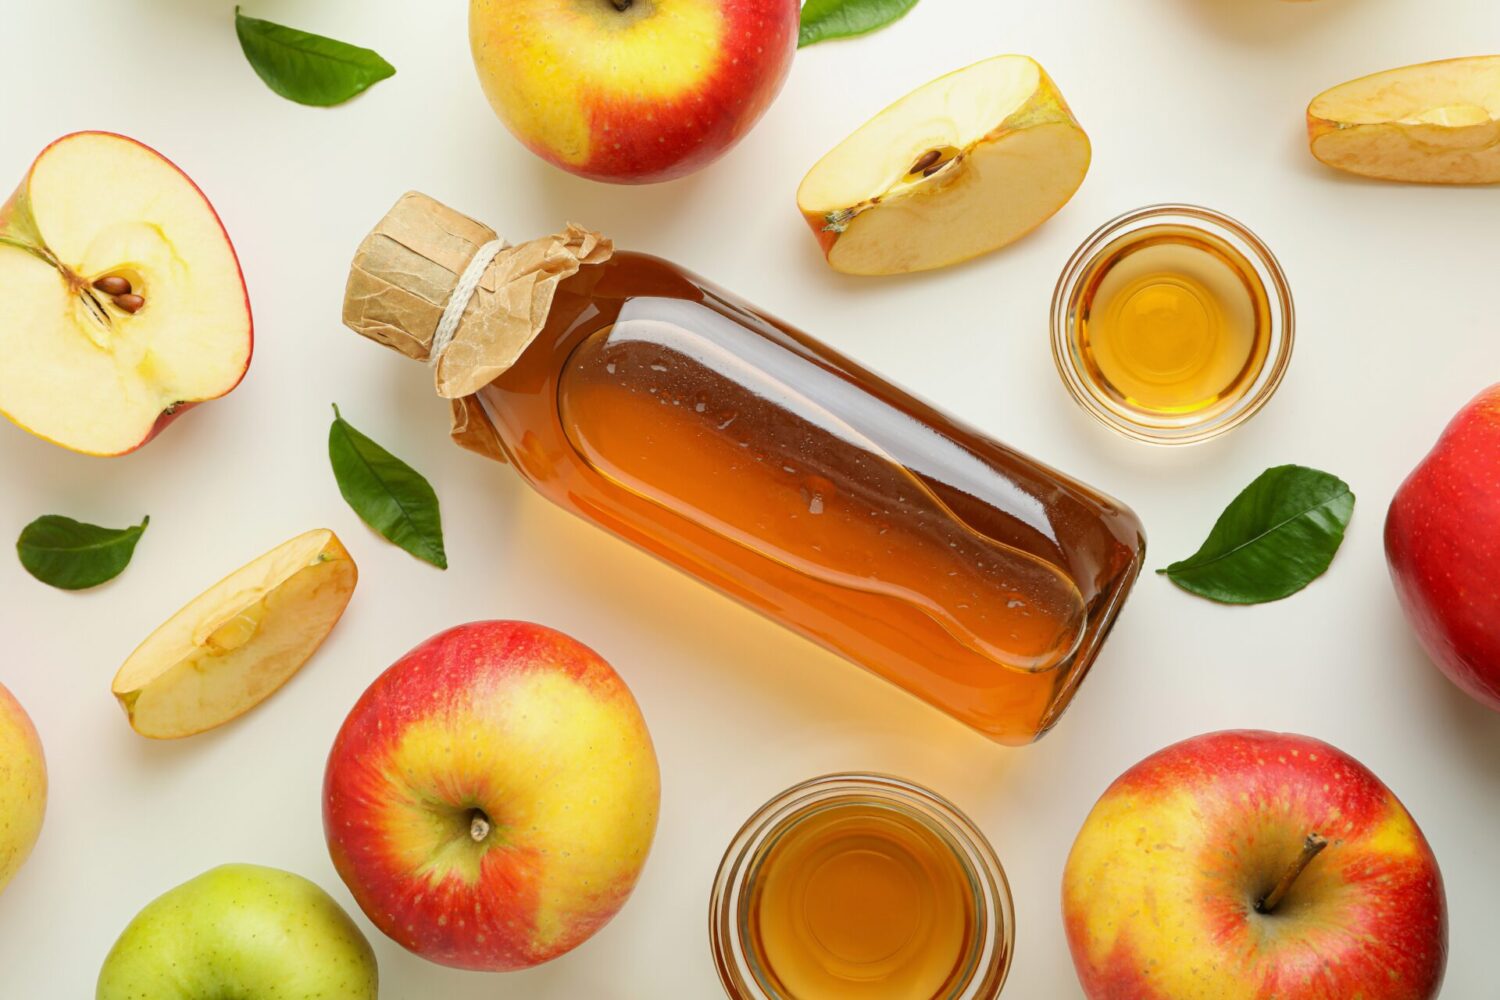 Apple cider vinegar: what’s the fuss?